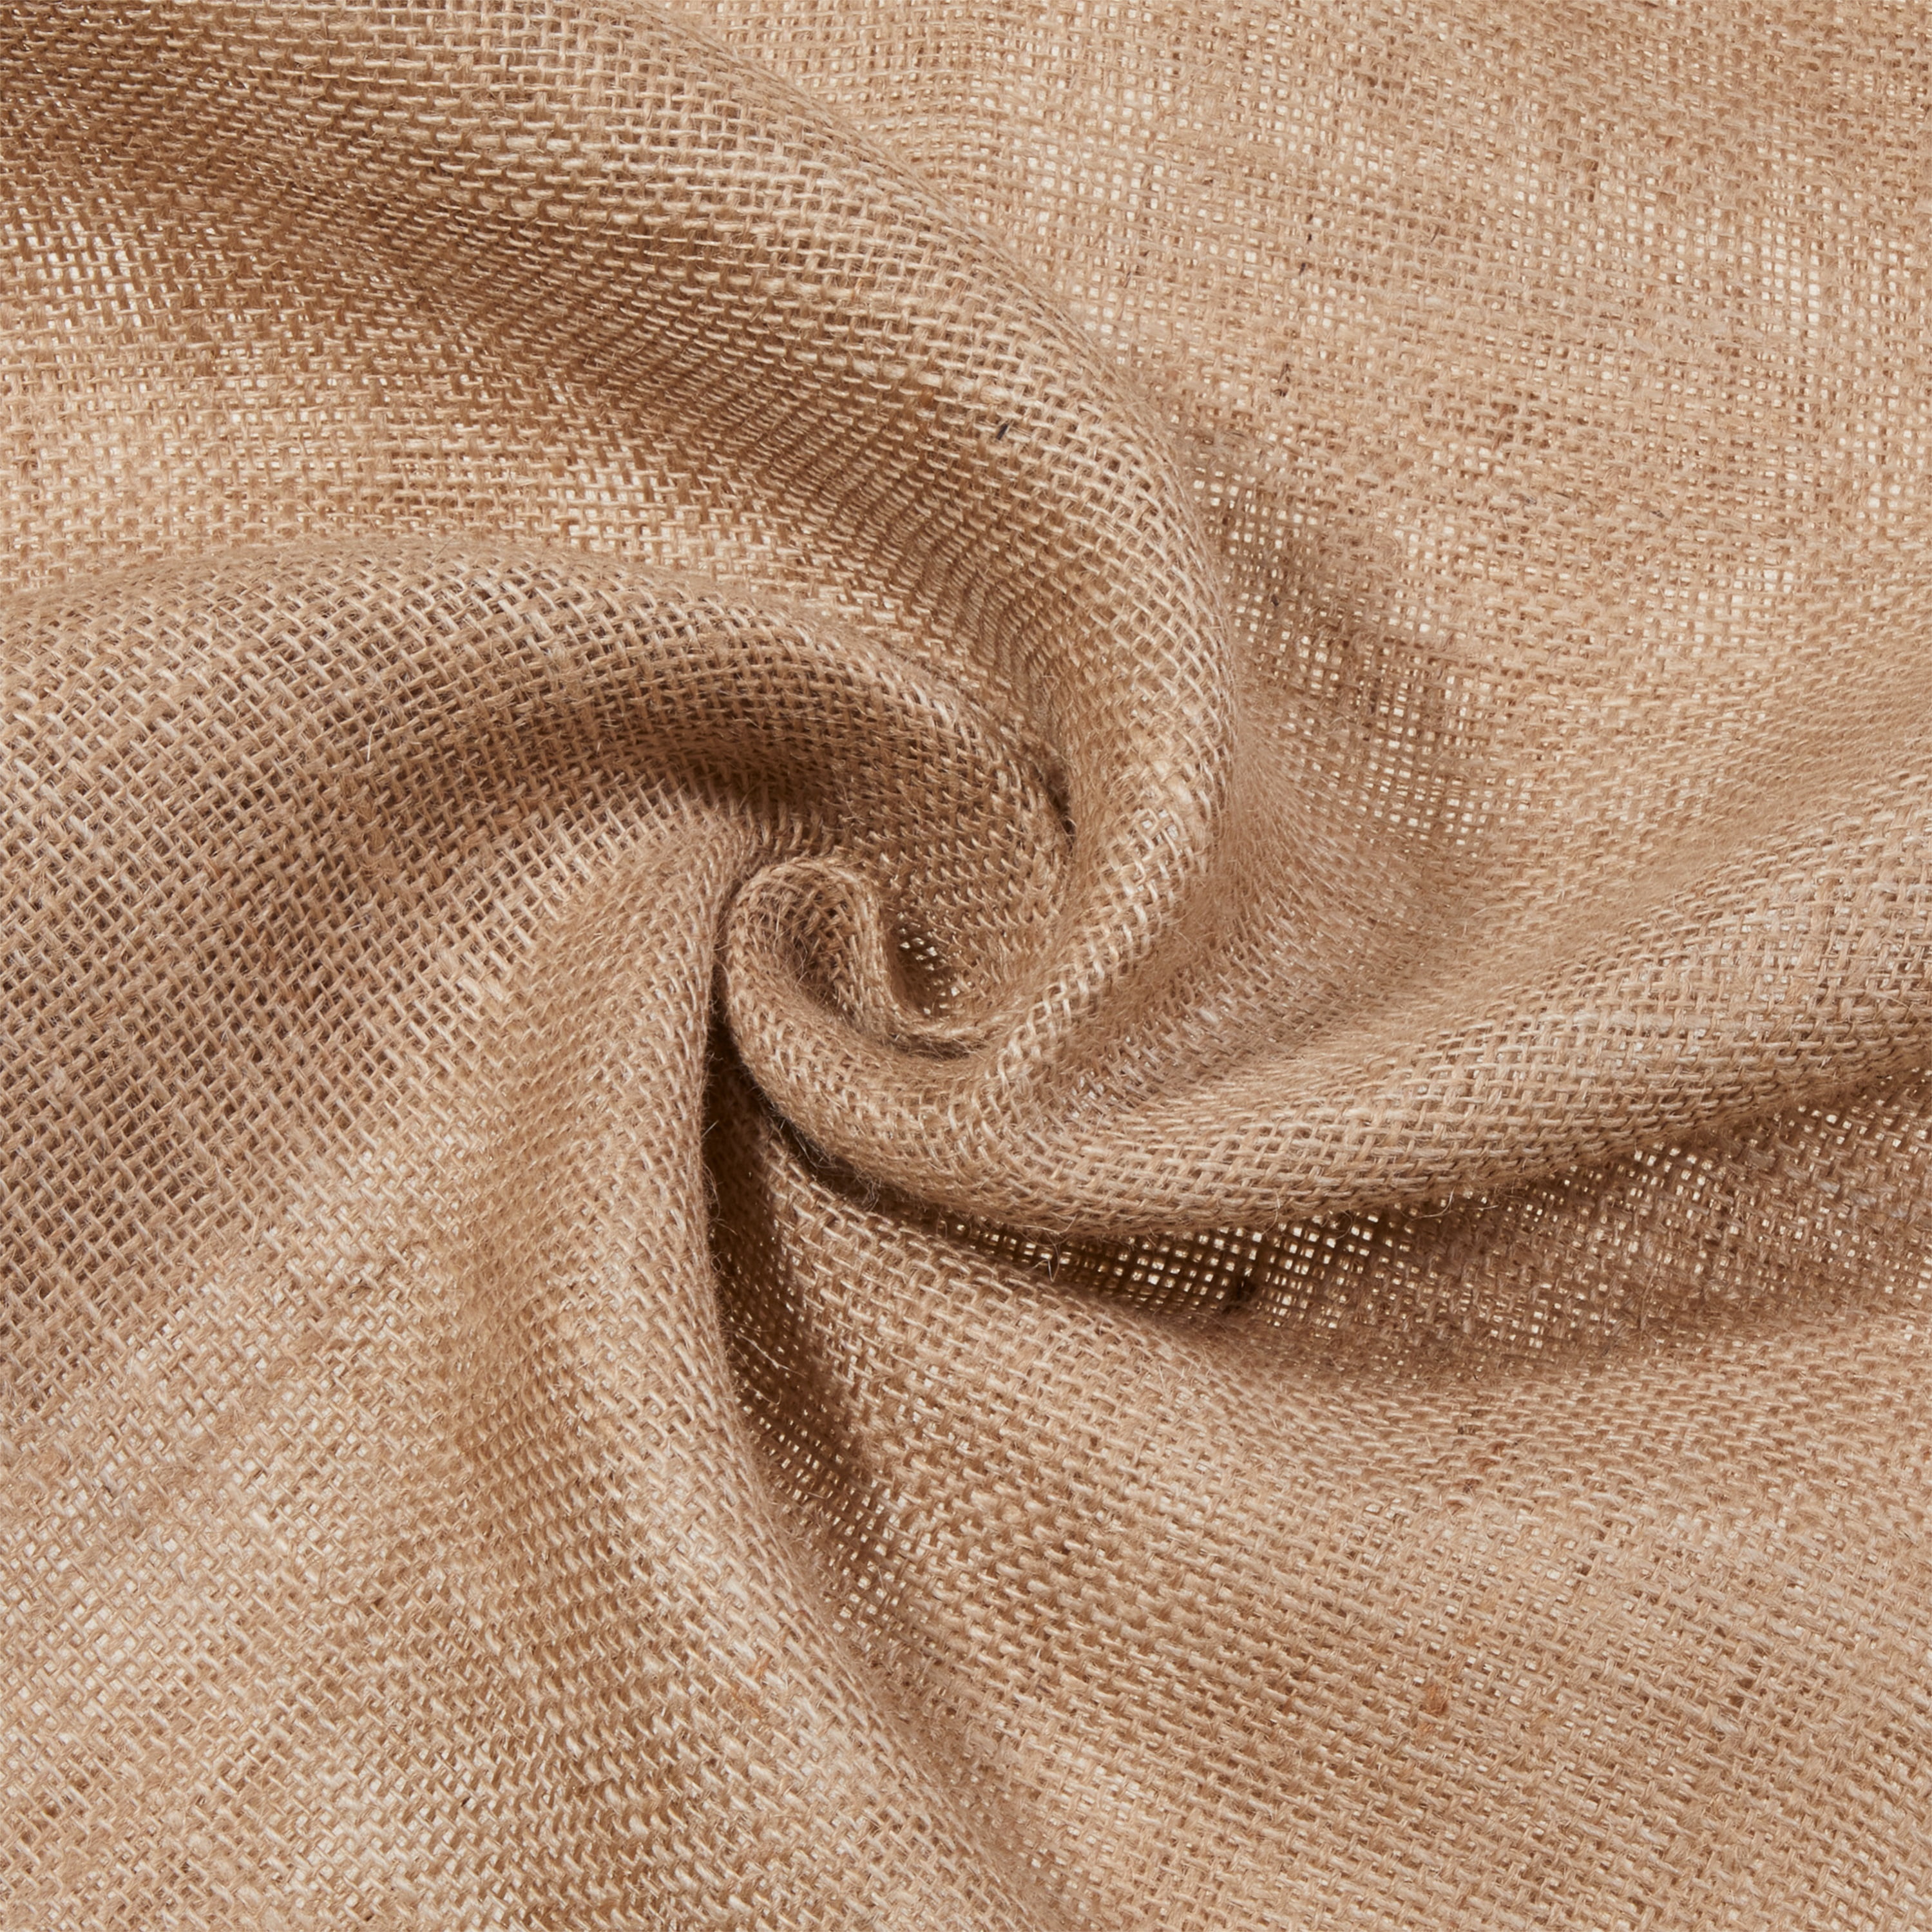 Allen Company Jute Burlap Craft Fabric, 46W x 2-Yards, Folded & Cut Fabric Roll, Natural